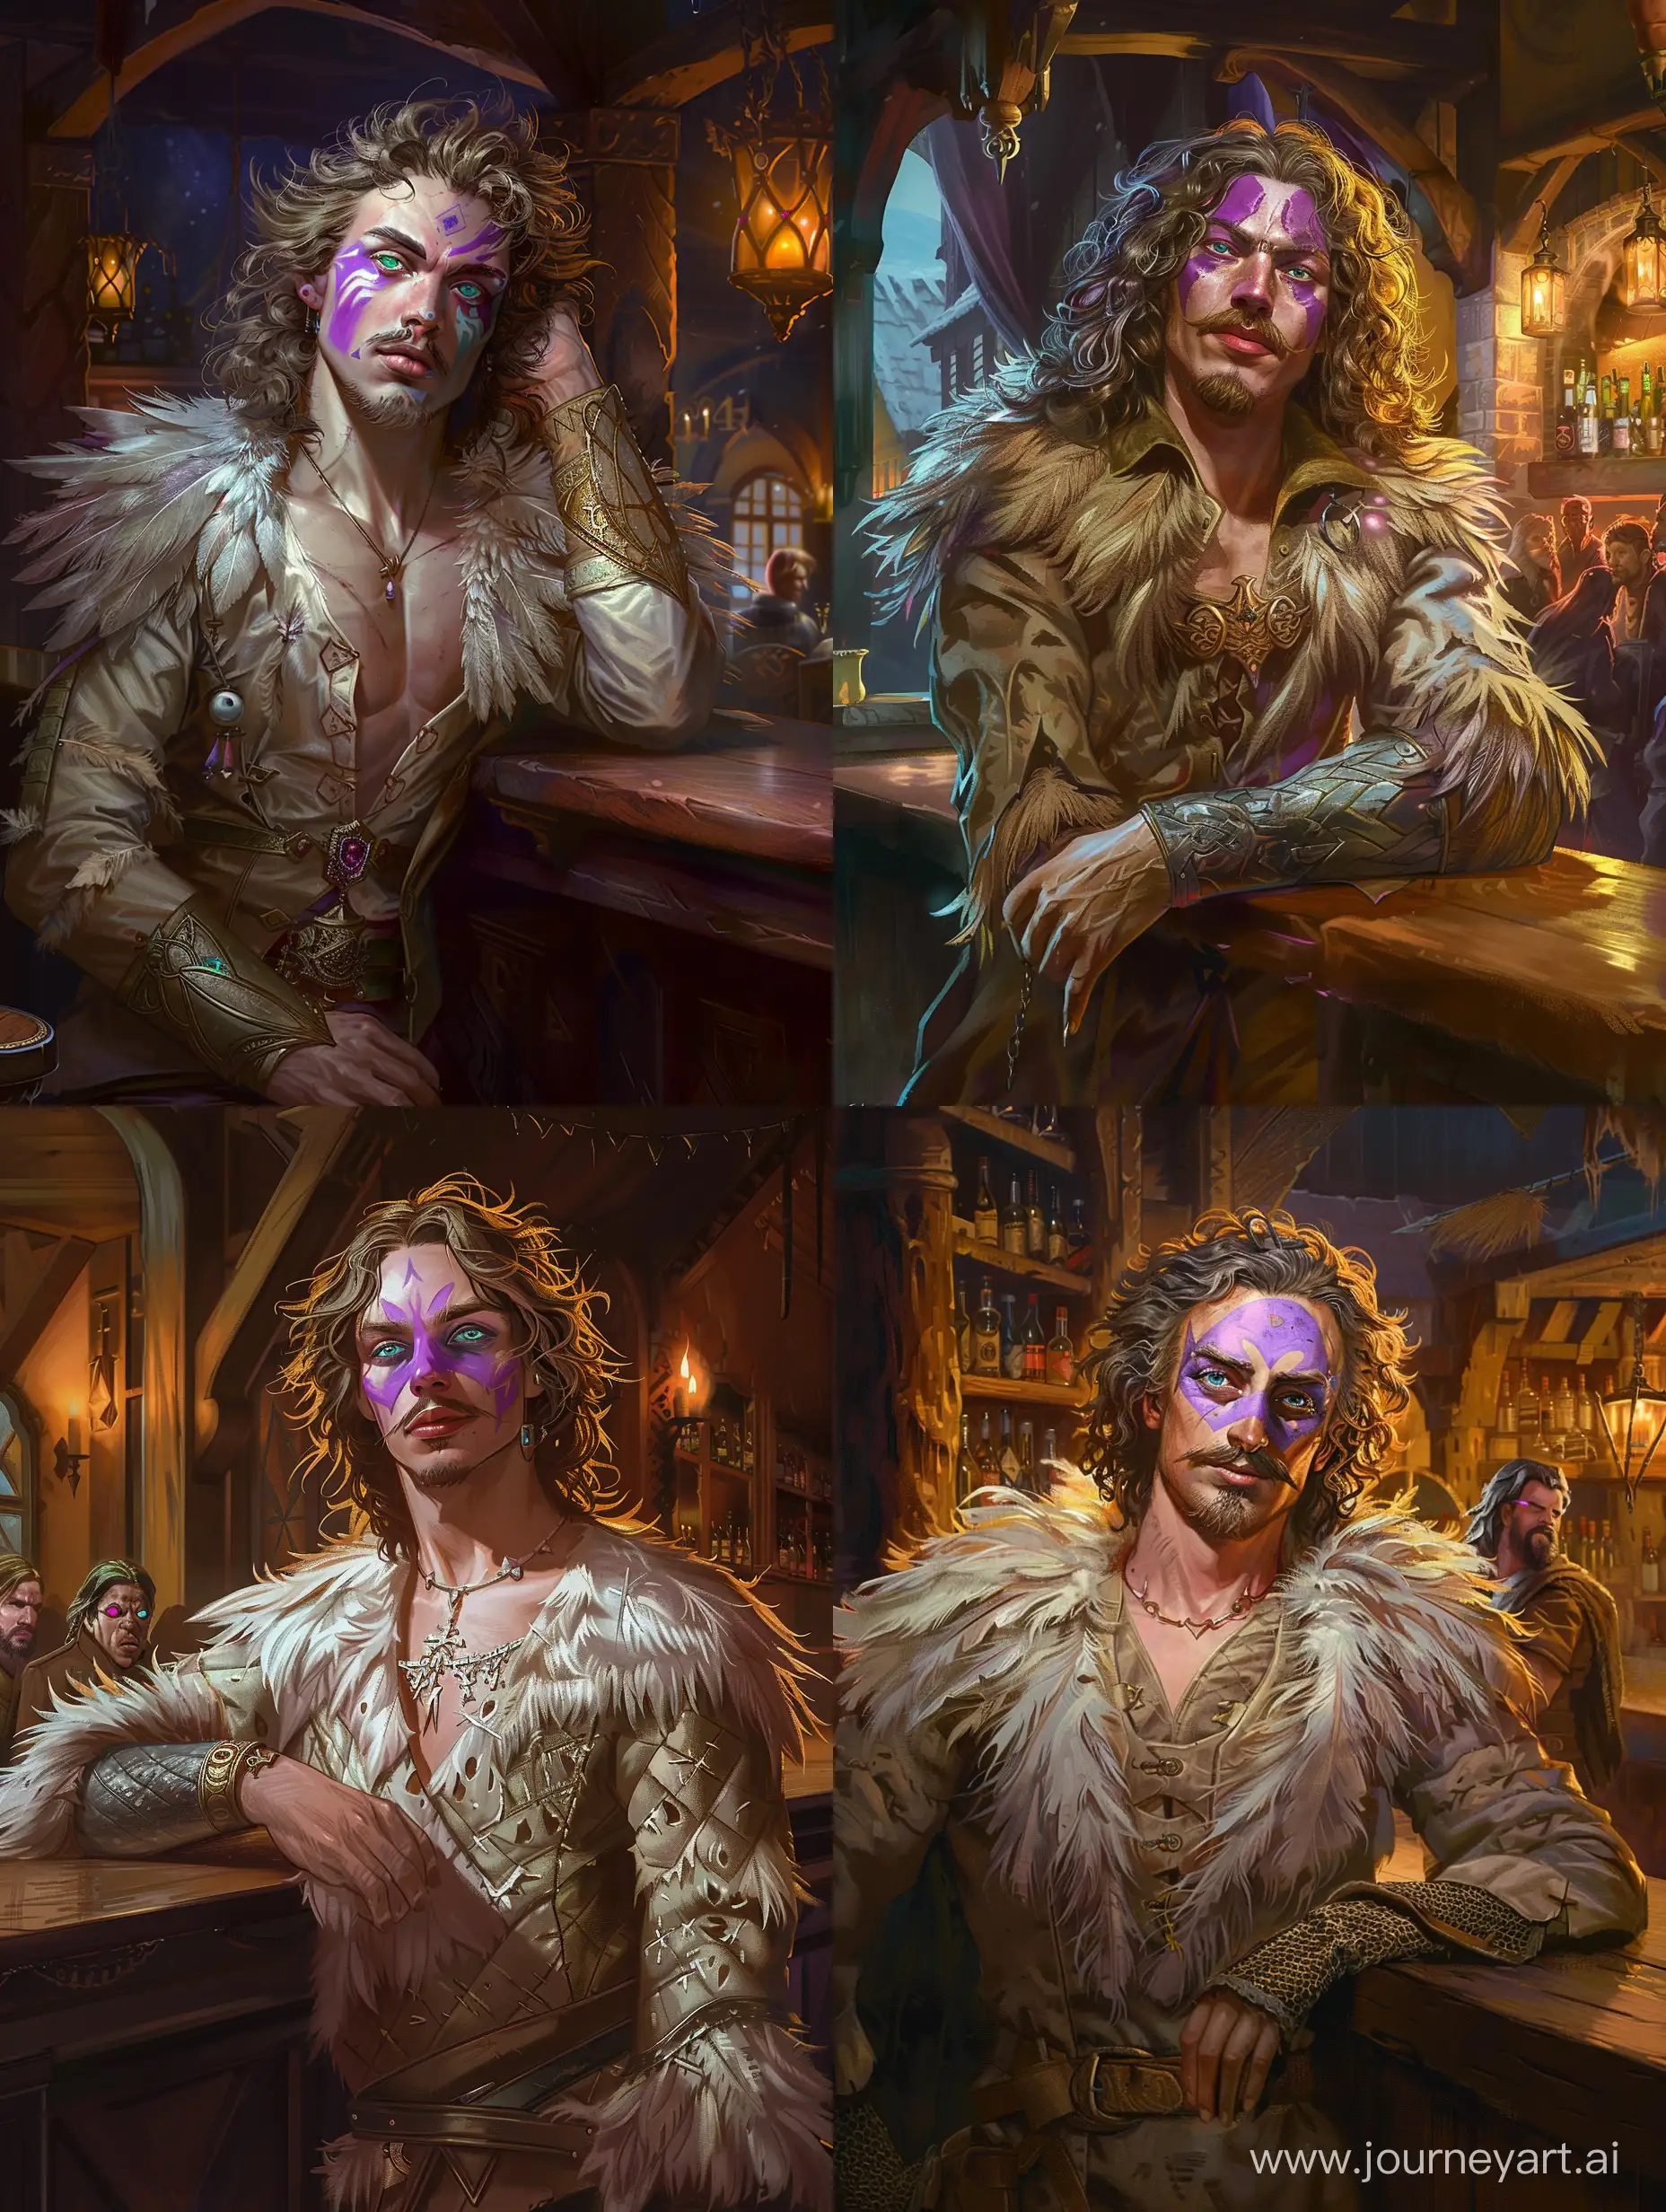 Sarcastic-Human-Male-Sorcerer-Portrait-in-Tevinter-Robes-at-Medieval-Tavern